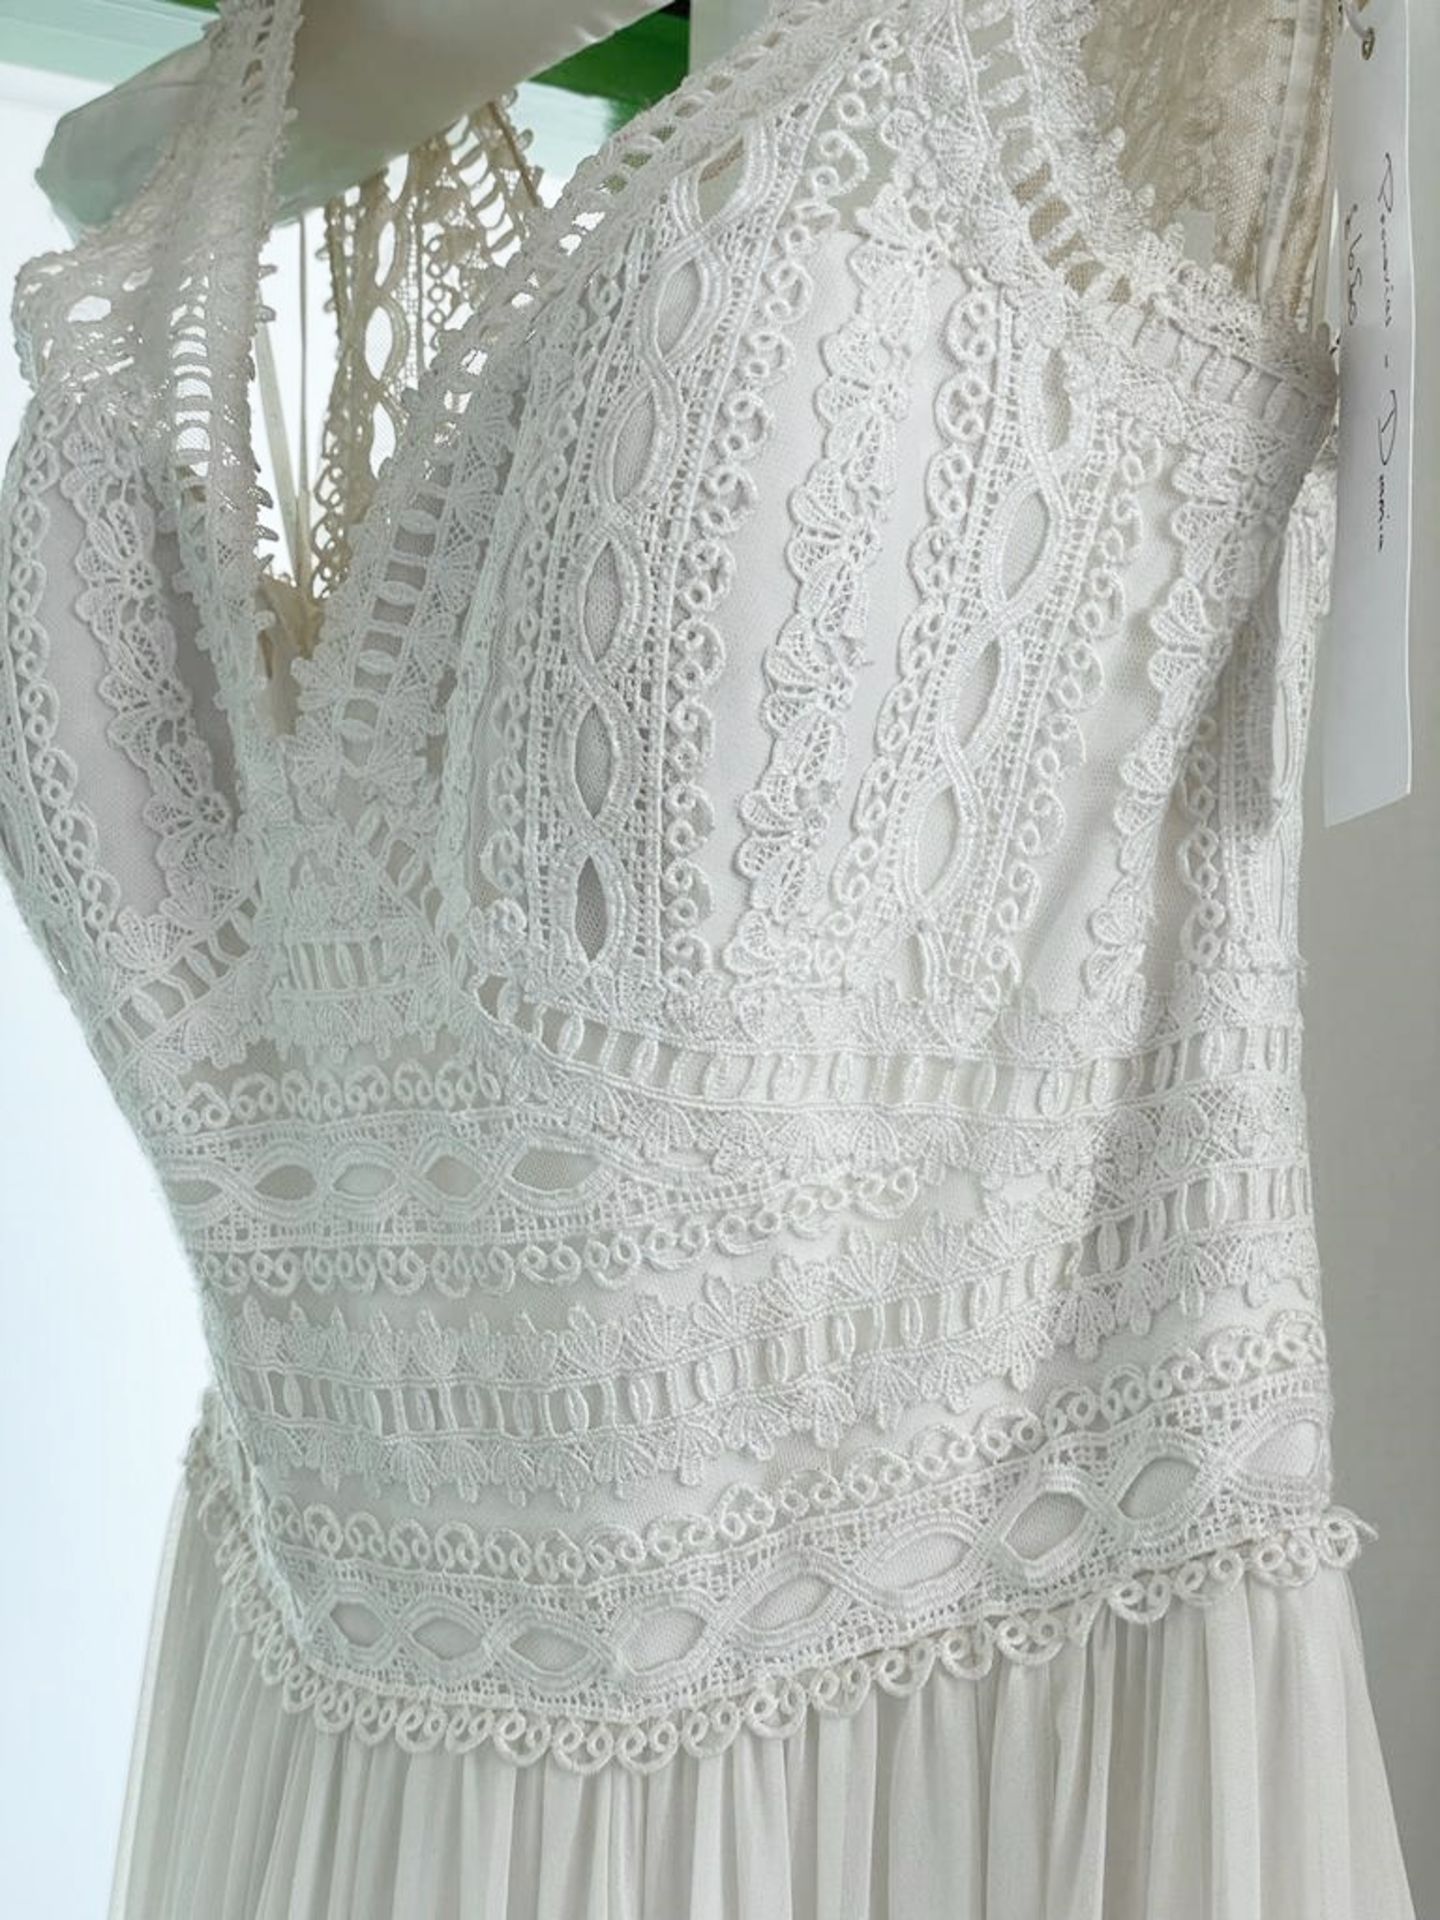 1 x PRONOVIAS 'Dramia' Designer Crocheted Lace Wedding Dress Bridal Gown, With Chiffon Gathered - Image 11 of 20